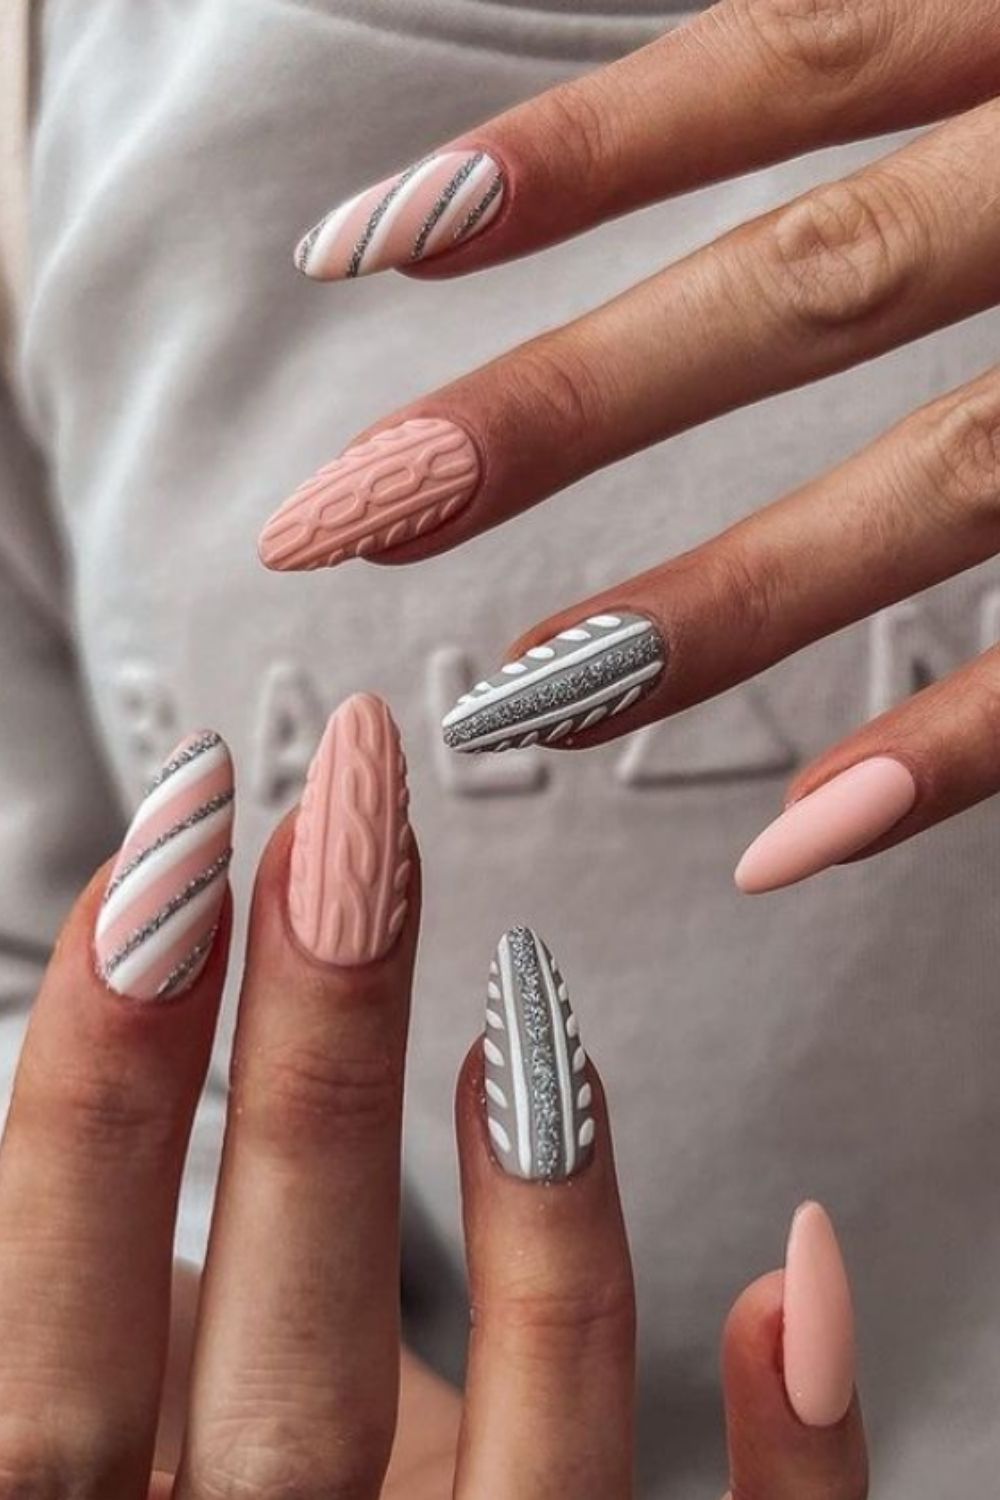 Classy almond nails